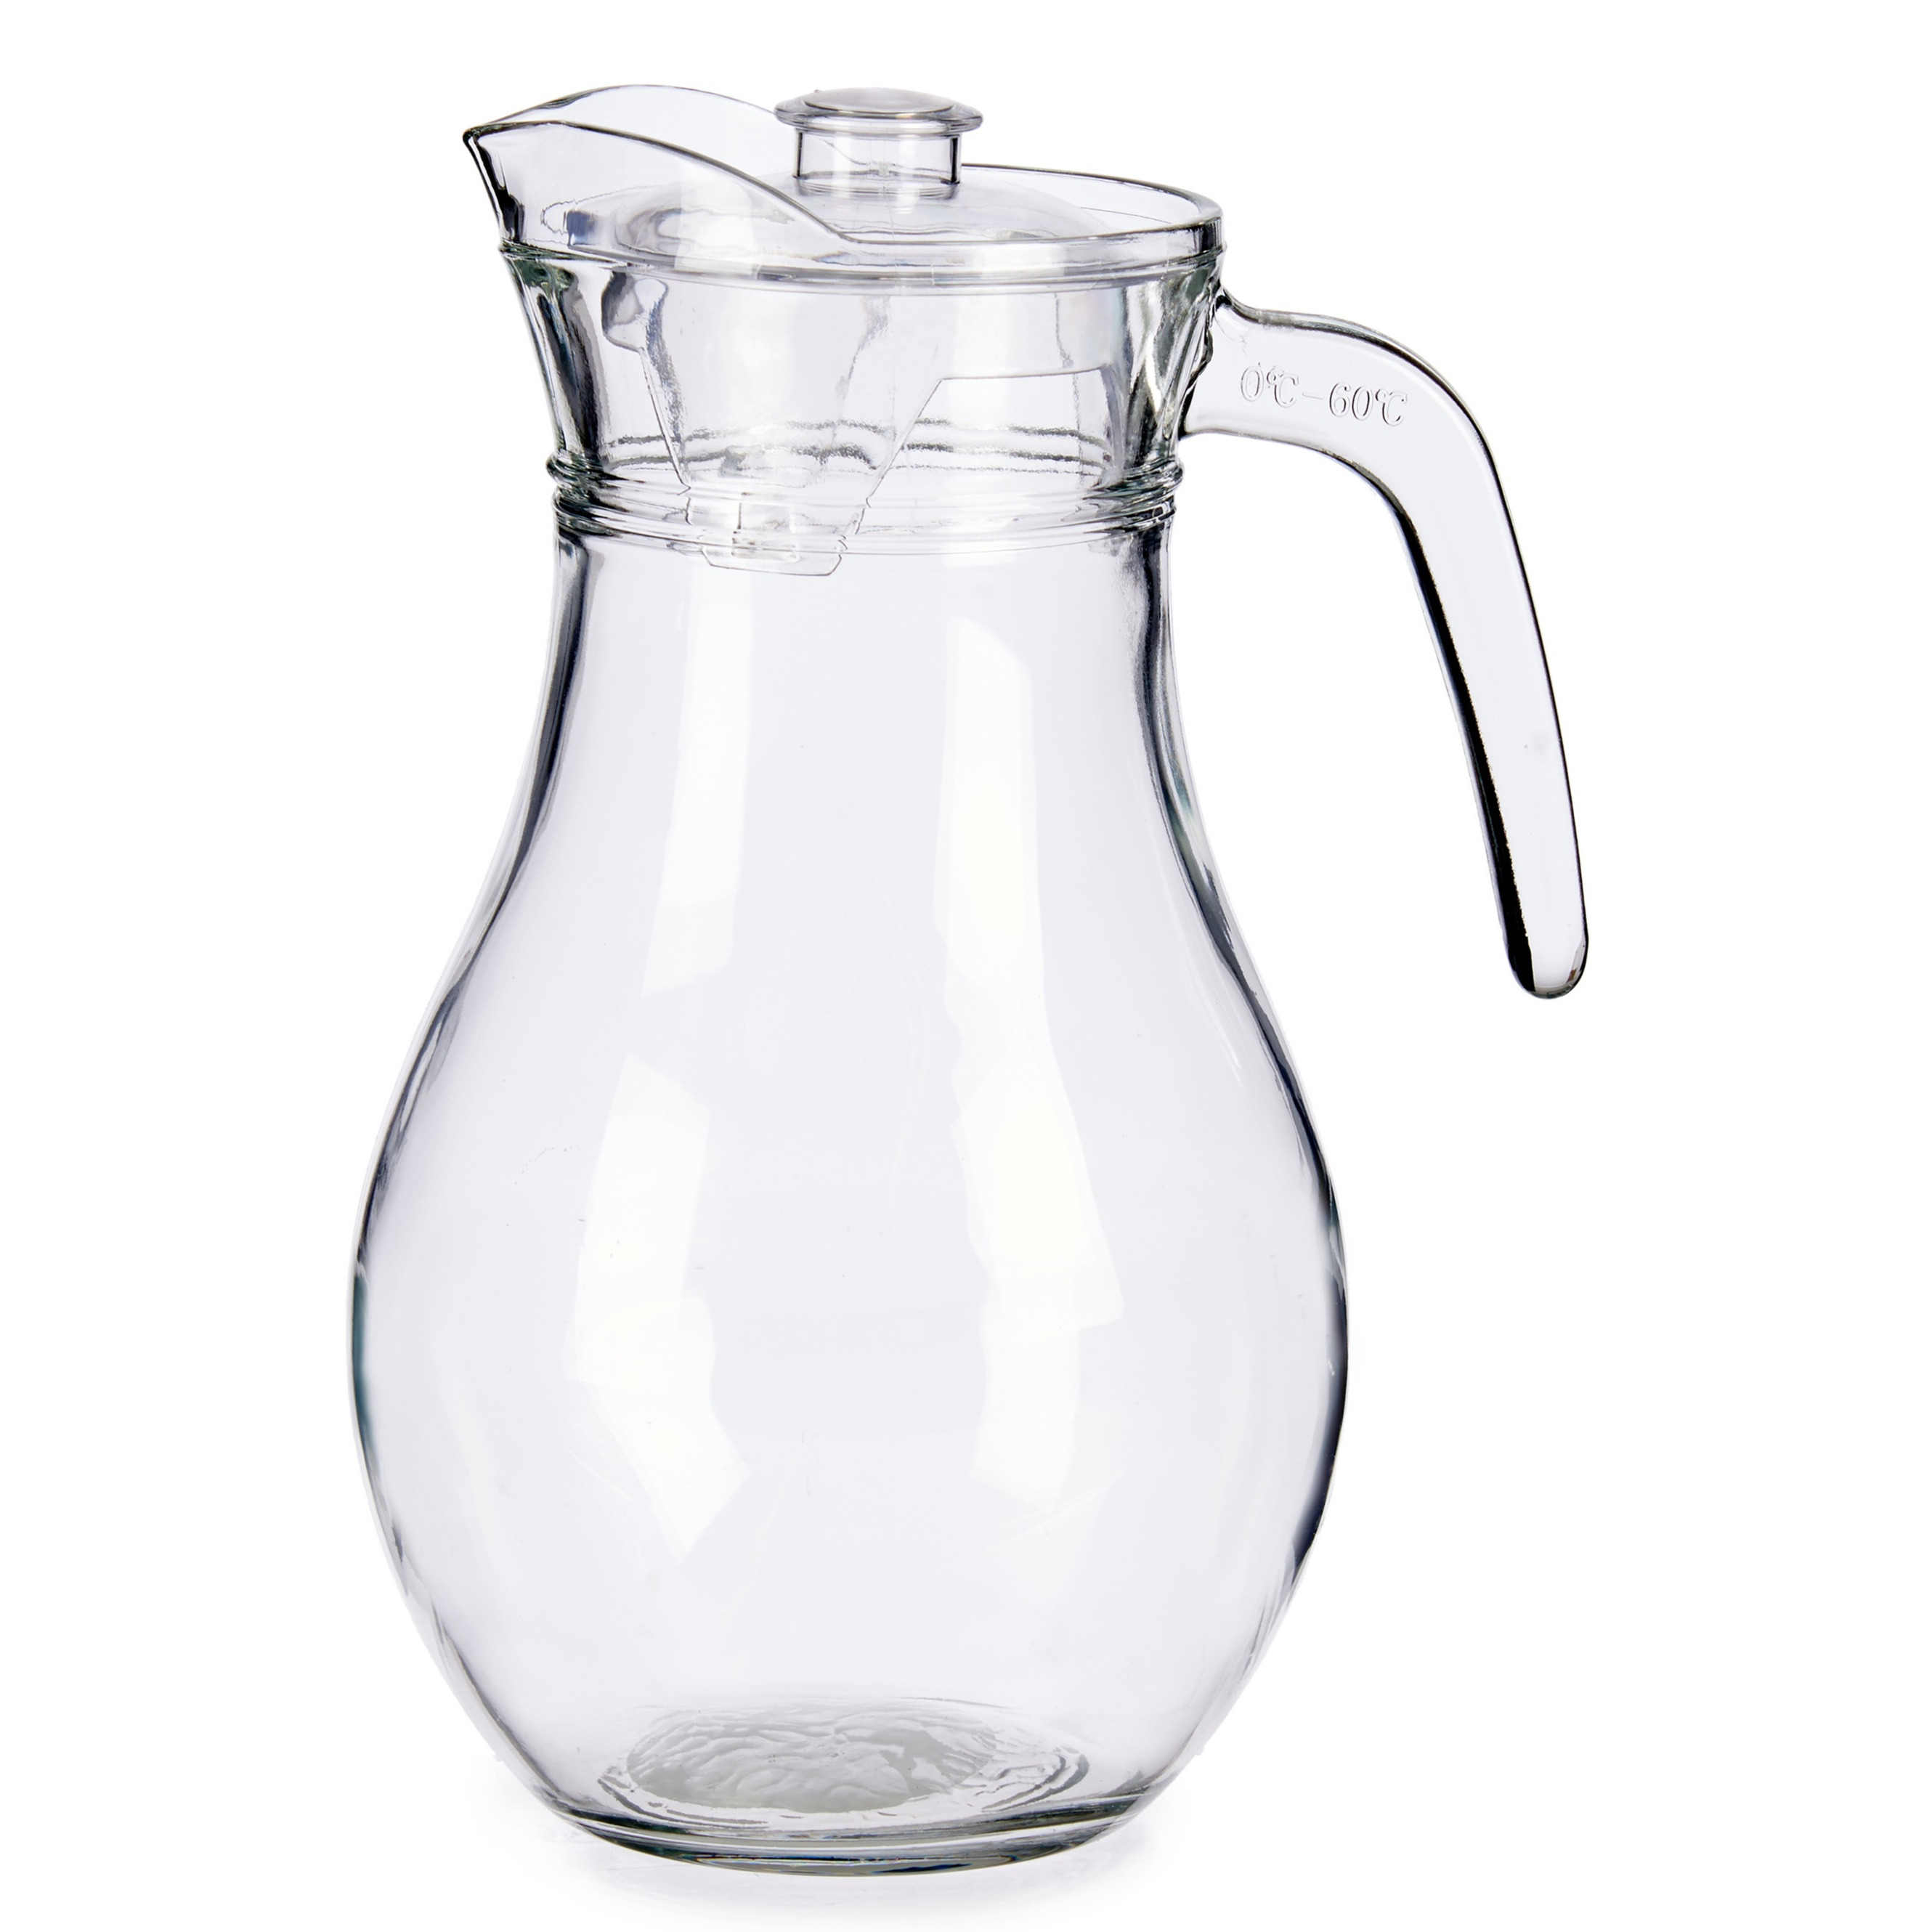 Vivalto sapkan karaf met deksel - glas - inhoud 1,8 liter - transparant -